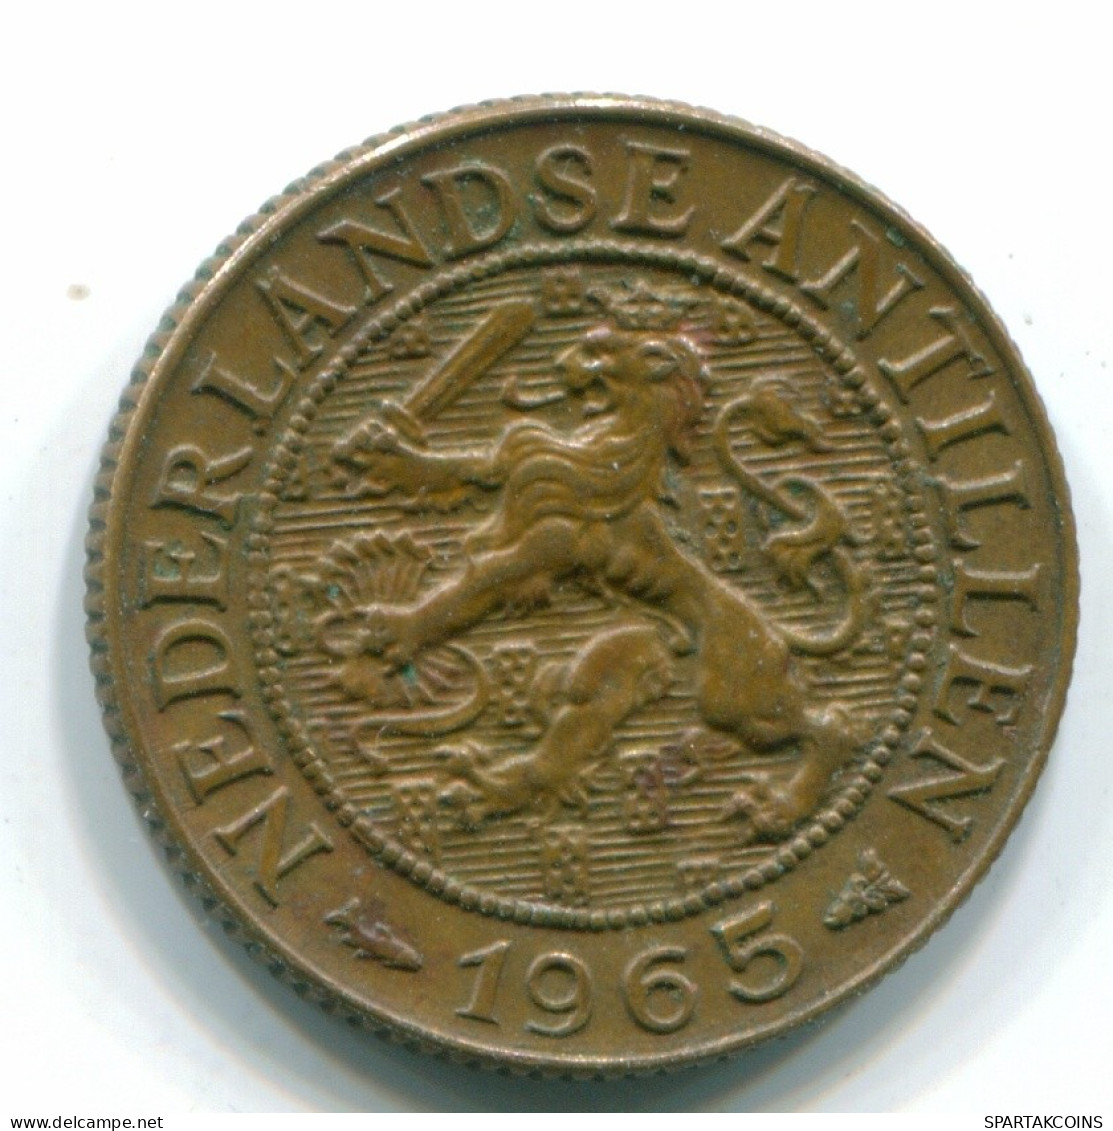 1 CENT 1965 NIEDERLÄNDISCHE ANTILLEN Bronze Fish Koloniale Münze #S11122.D.A - Netherlands Antilles